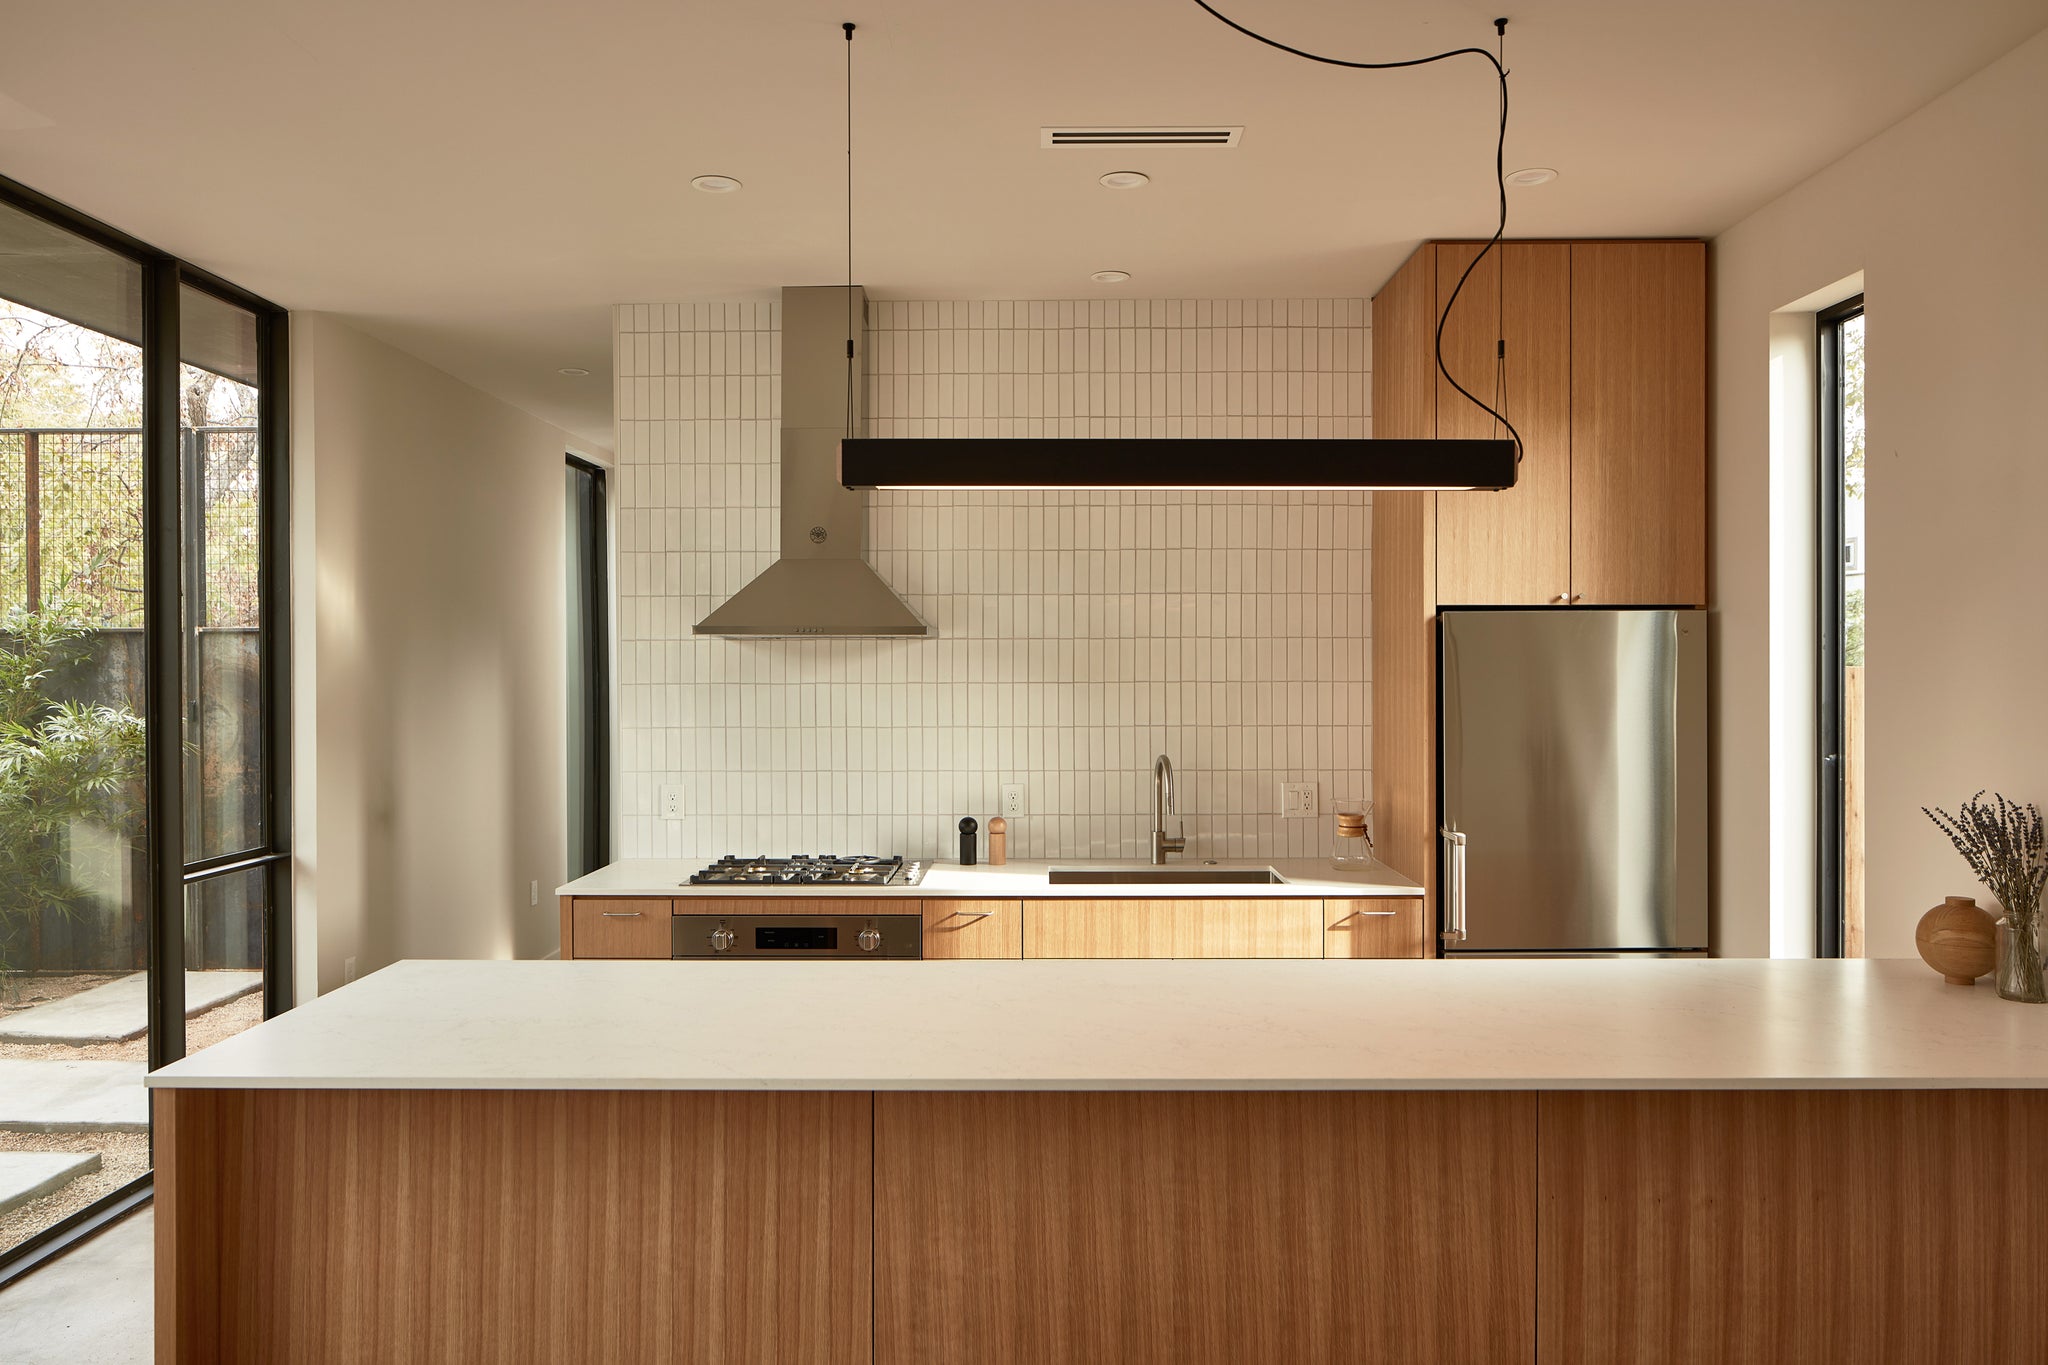 Modern kitchen design with white tiles